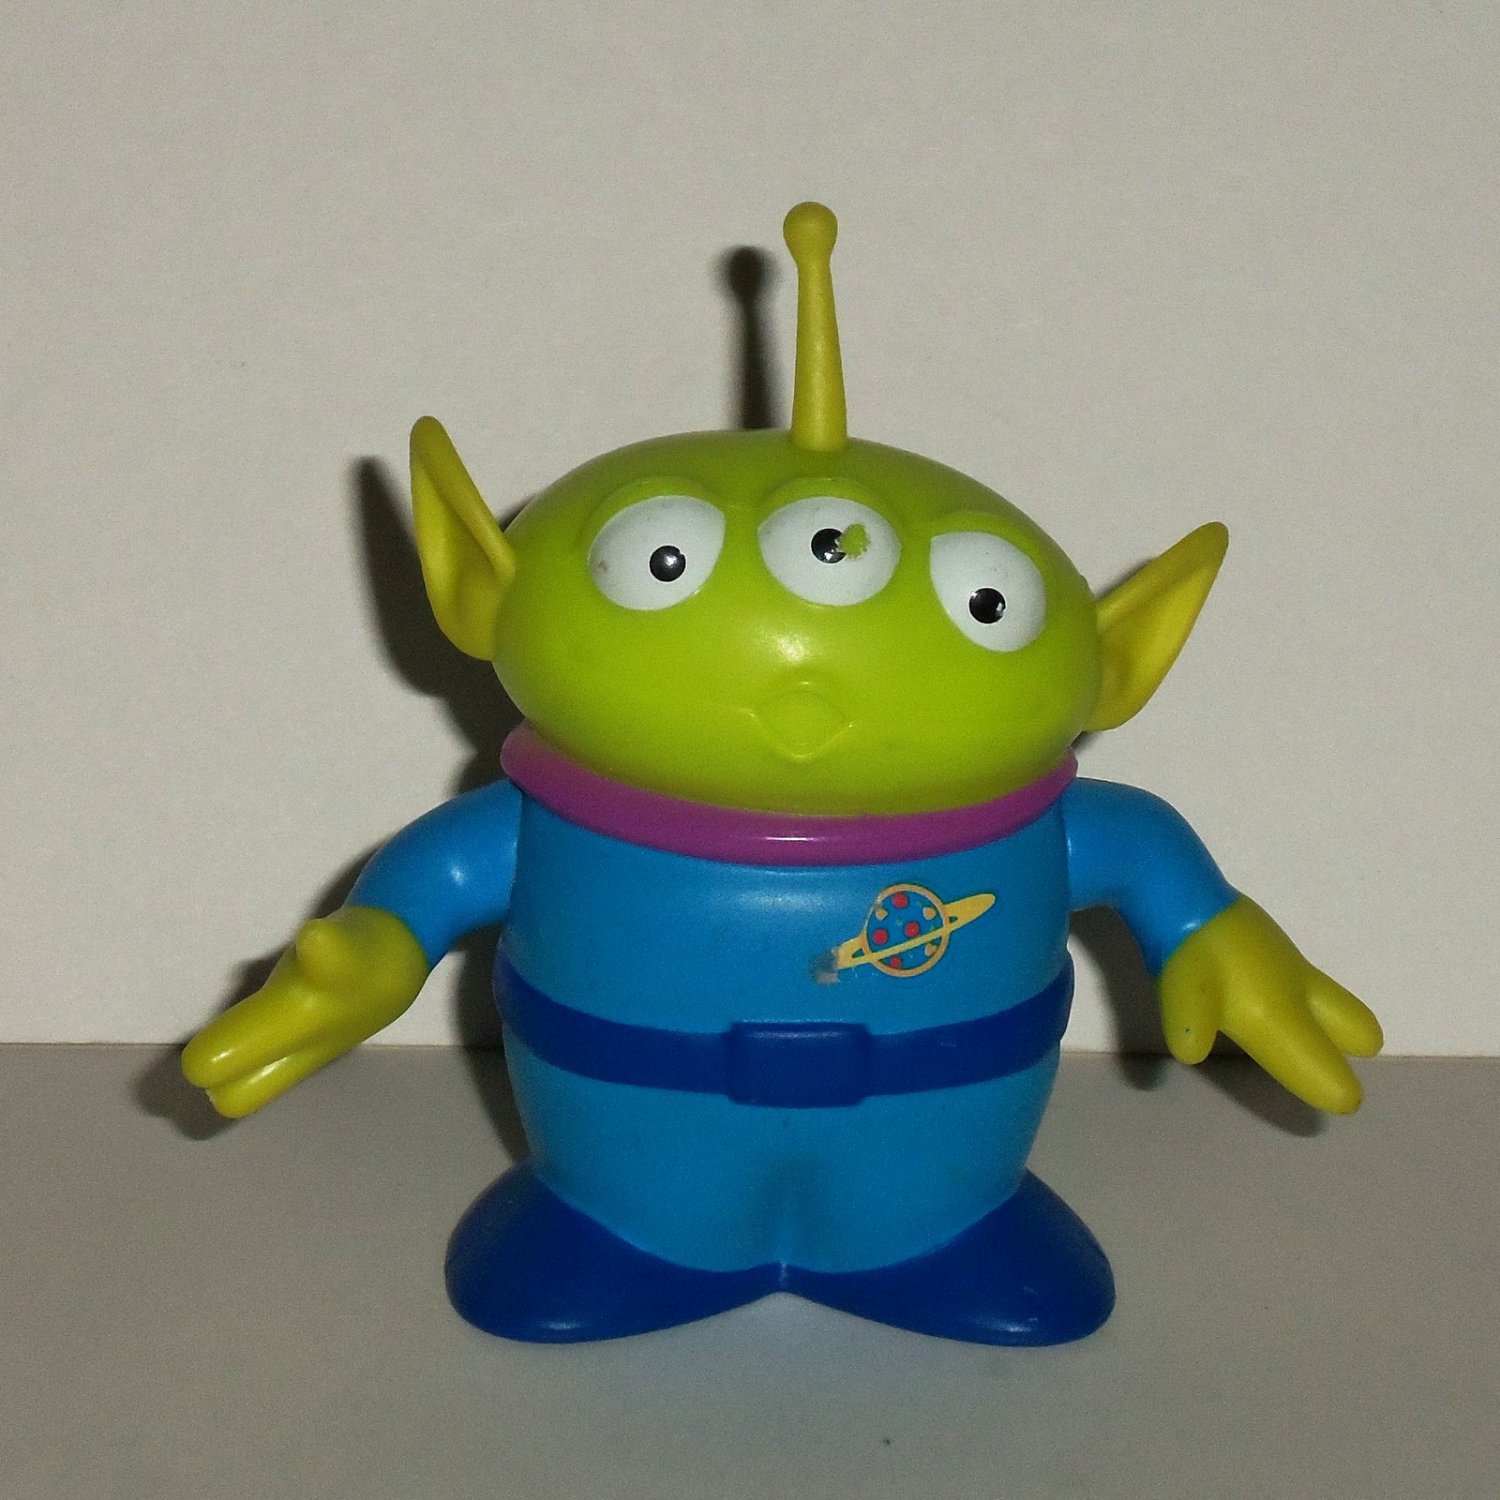 does the toy alien help in disney magic kingdom